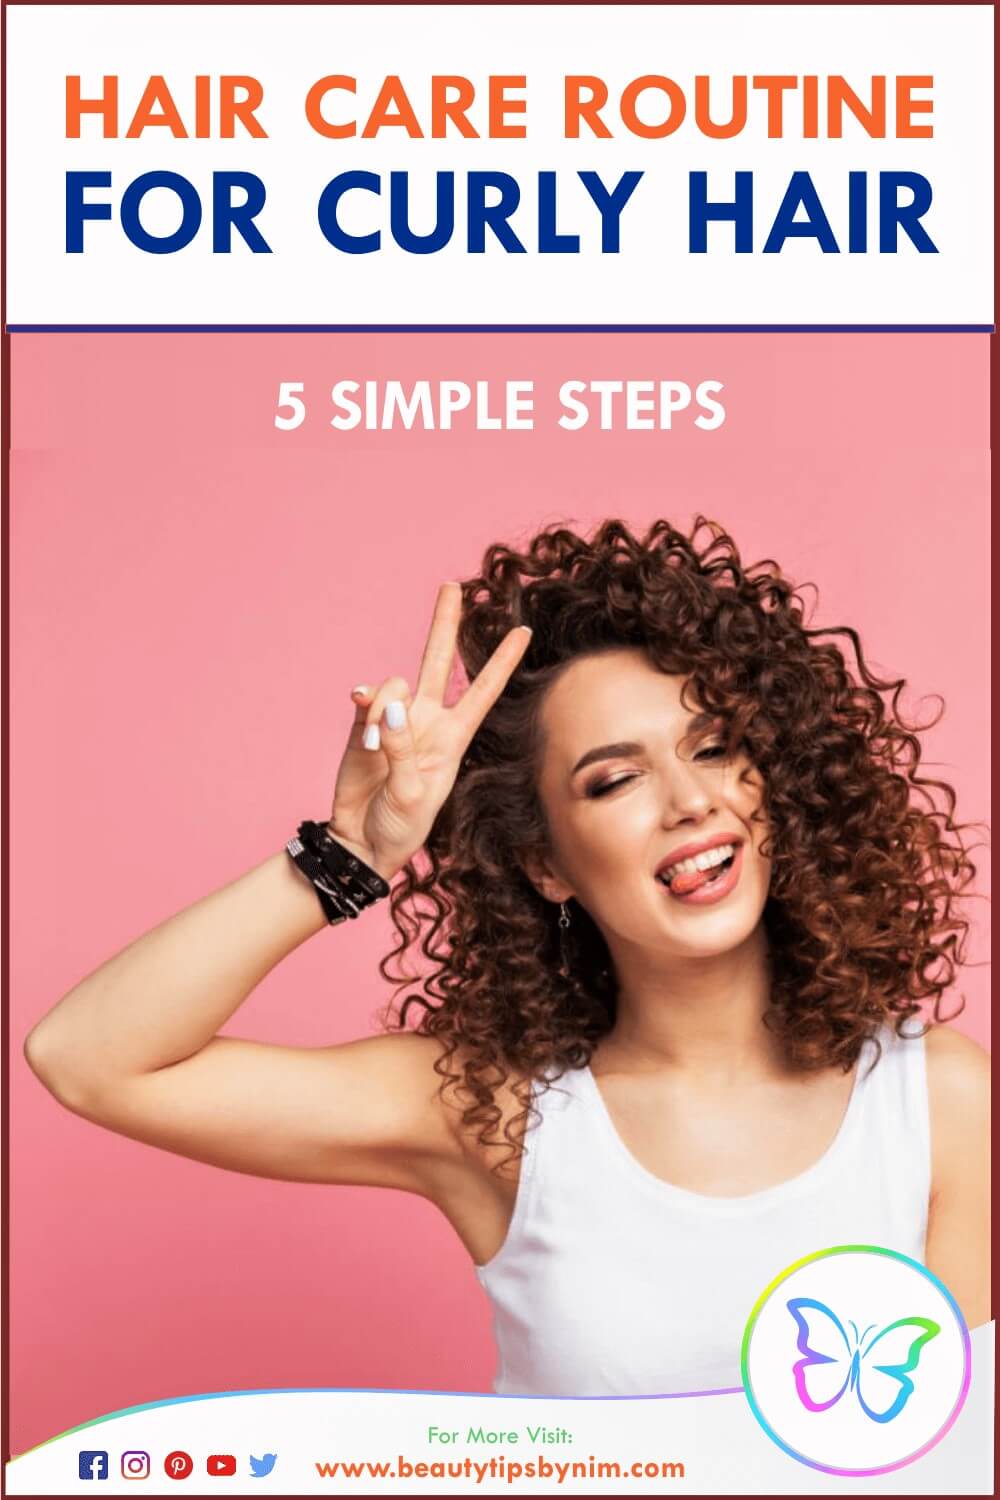 Hair care routine steps